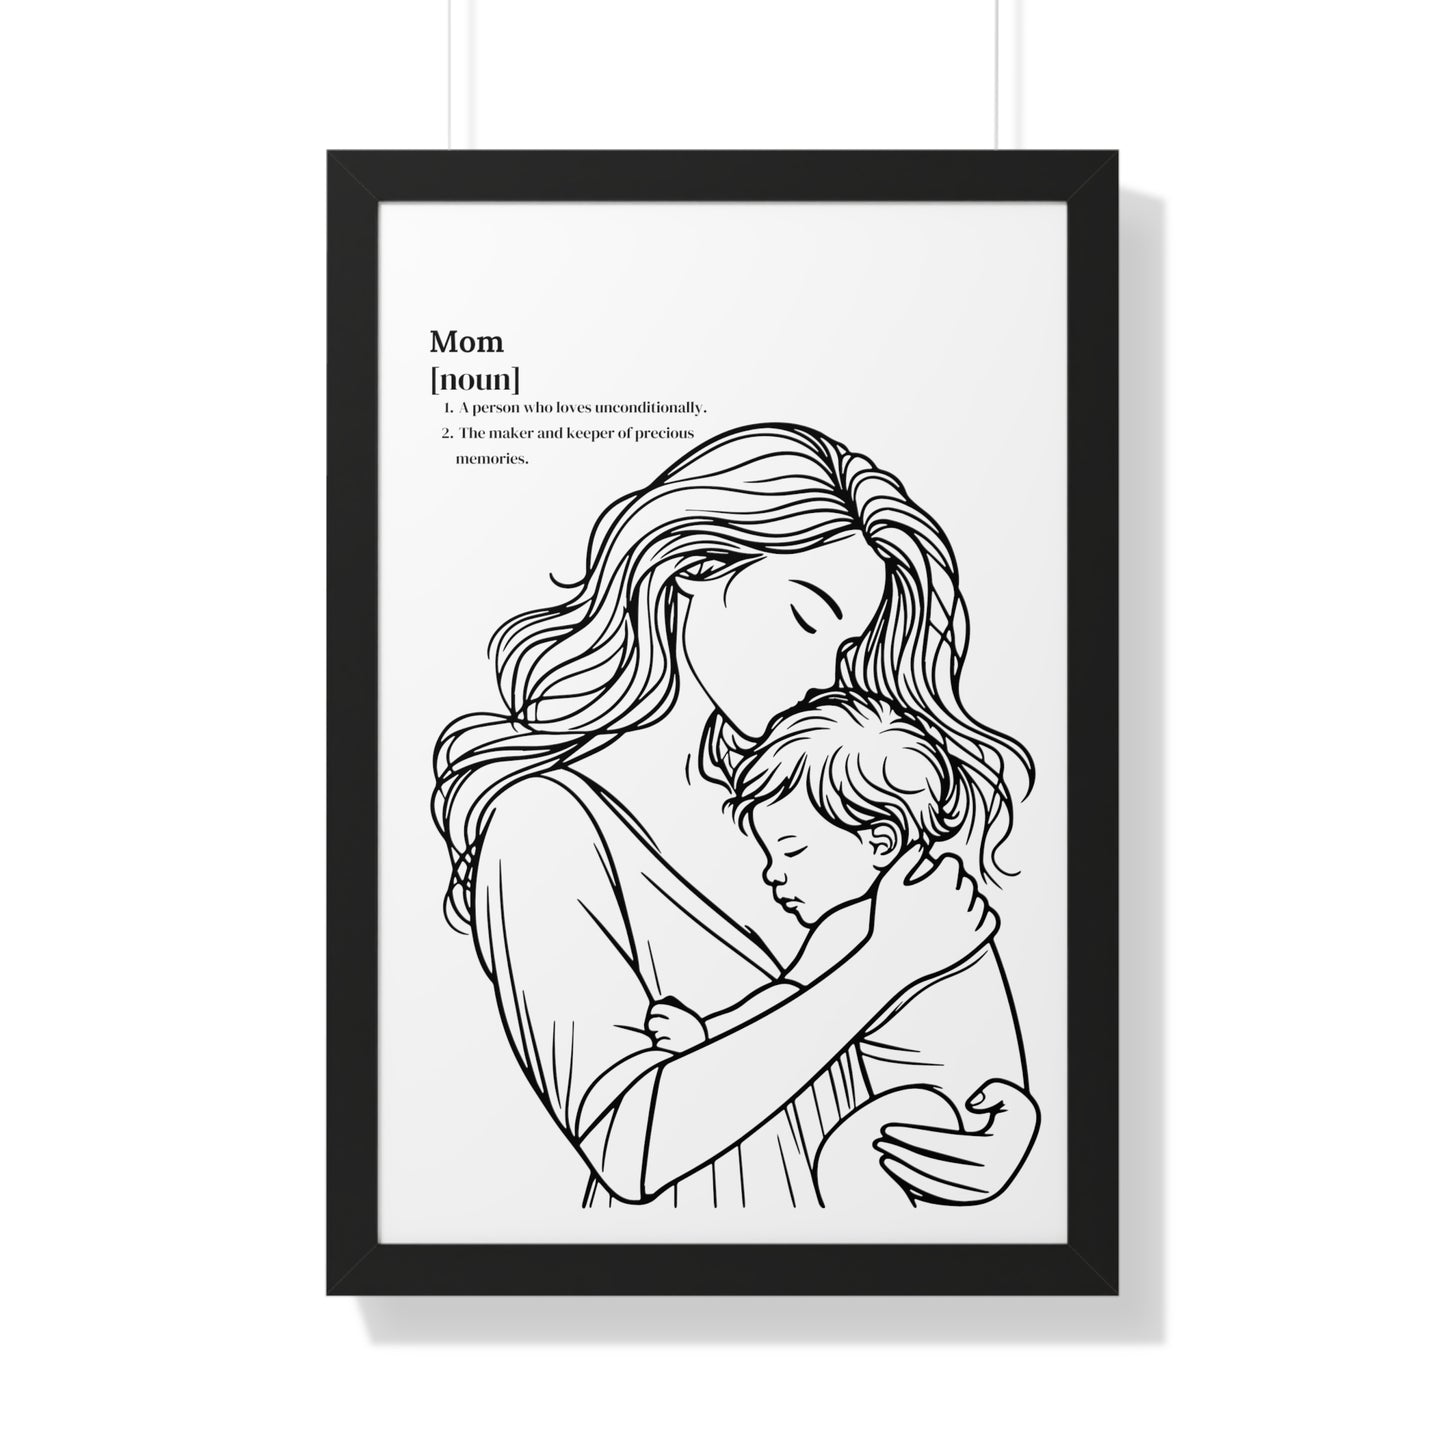 Cherish Every Moment: Mom Framed Poster